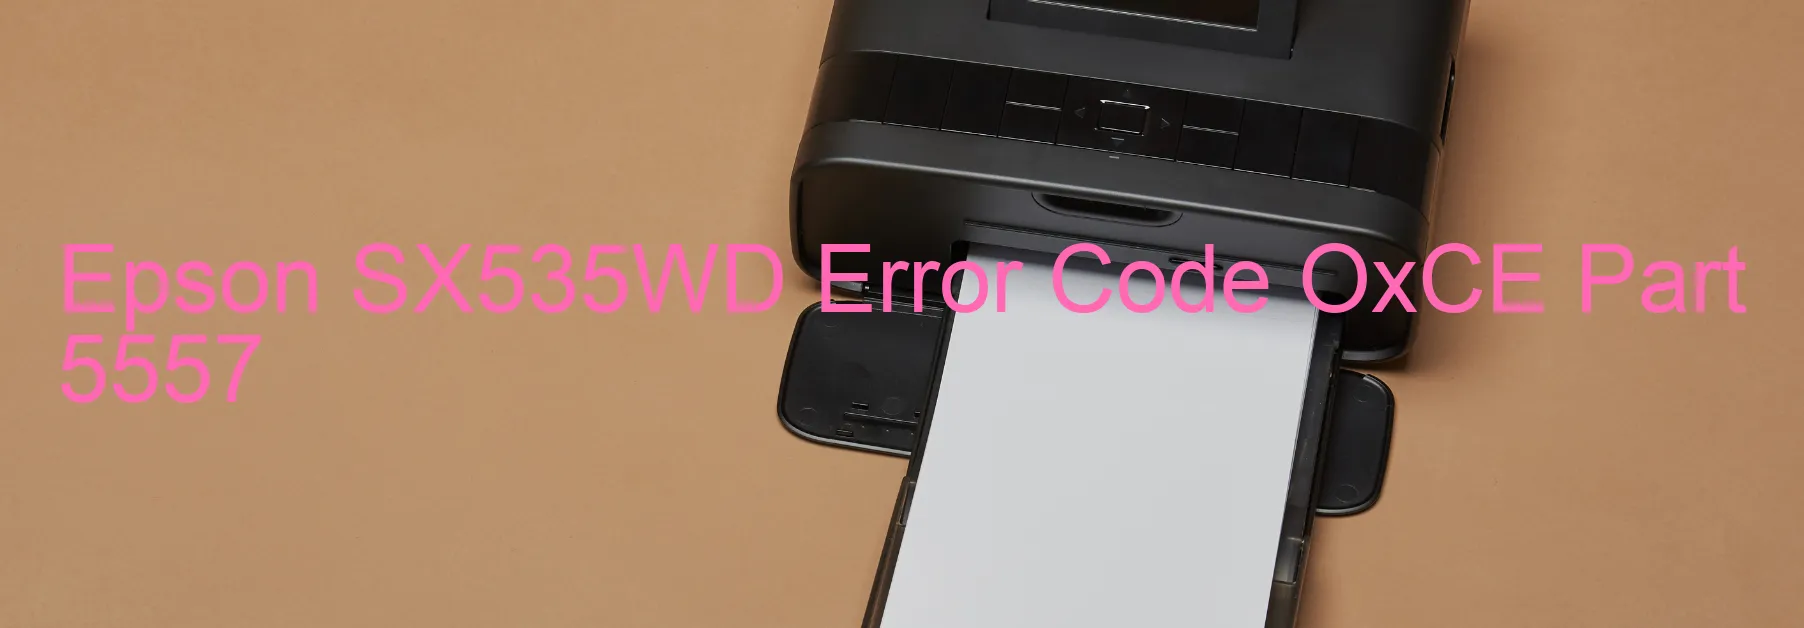 Epson SX535WD Error OxCE